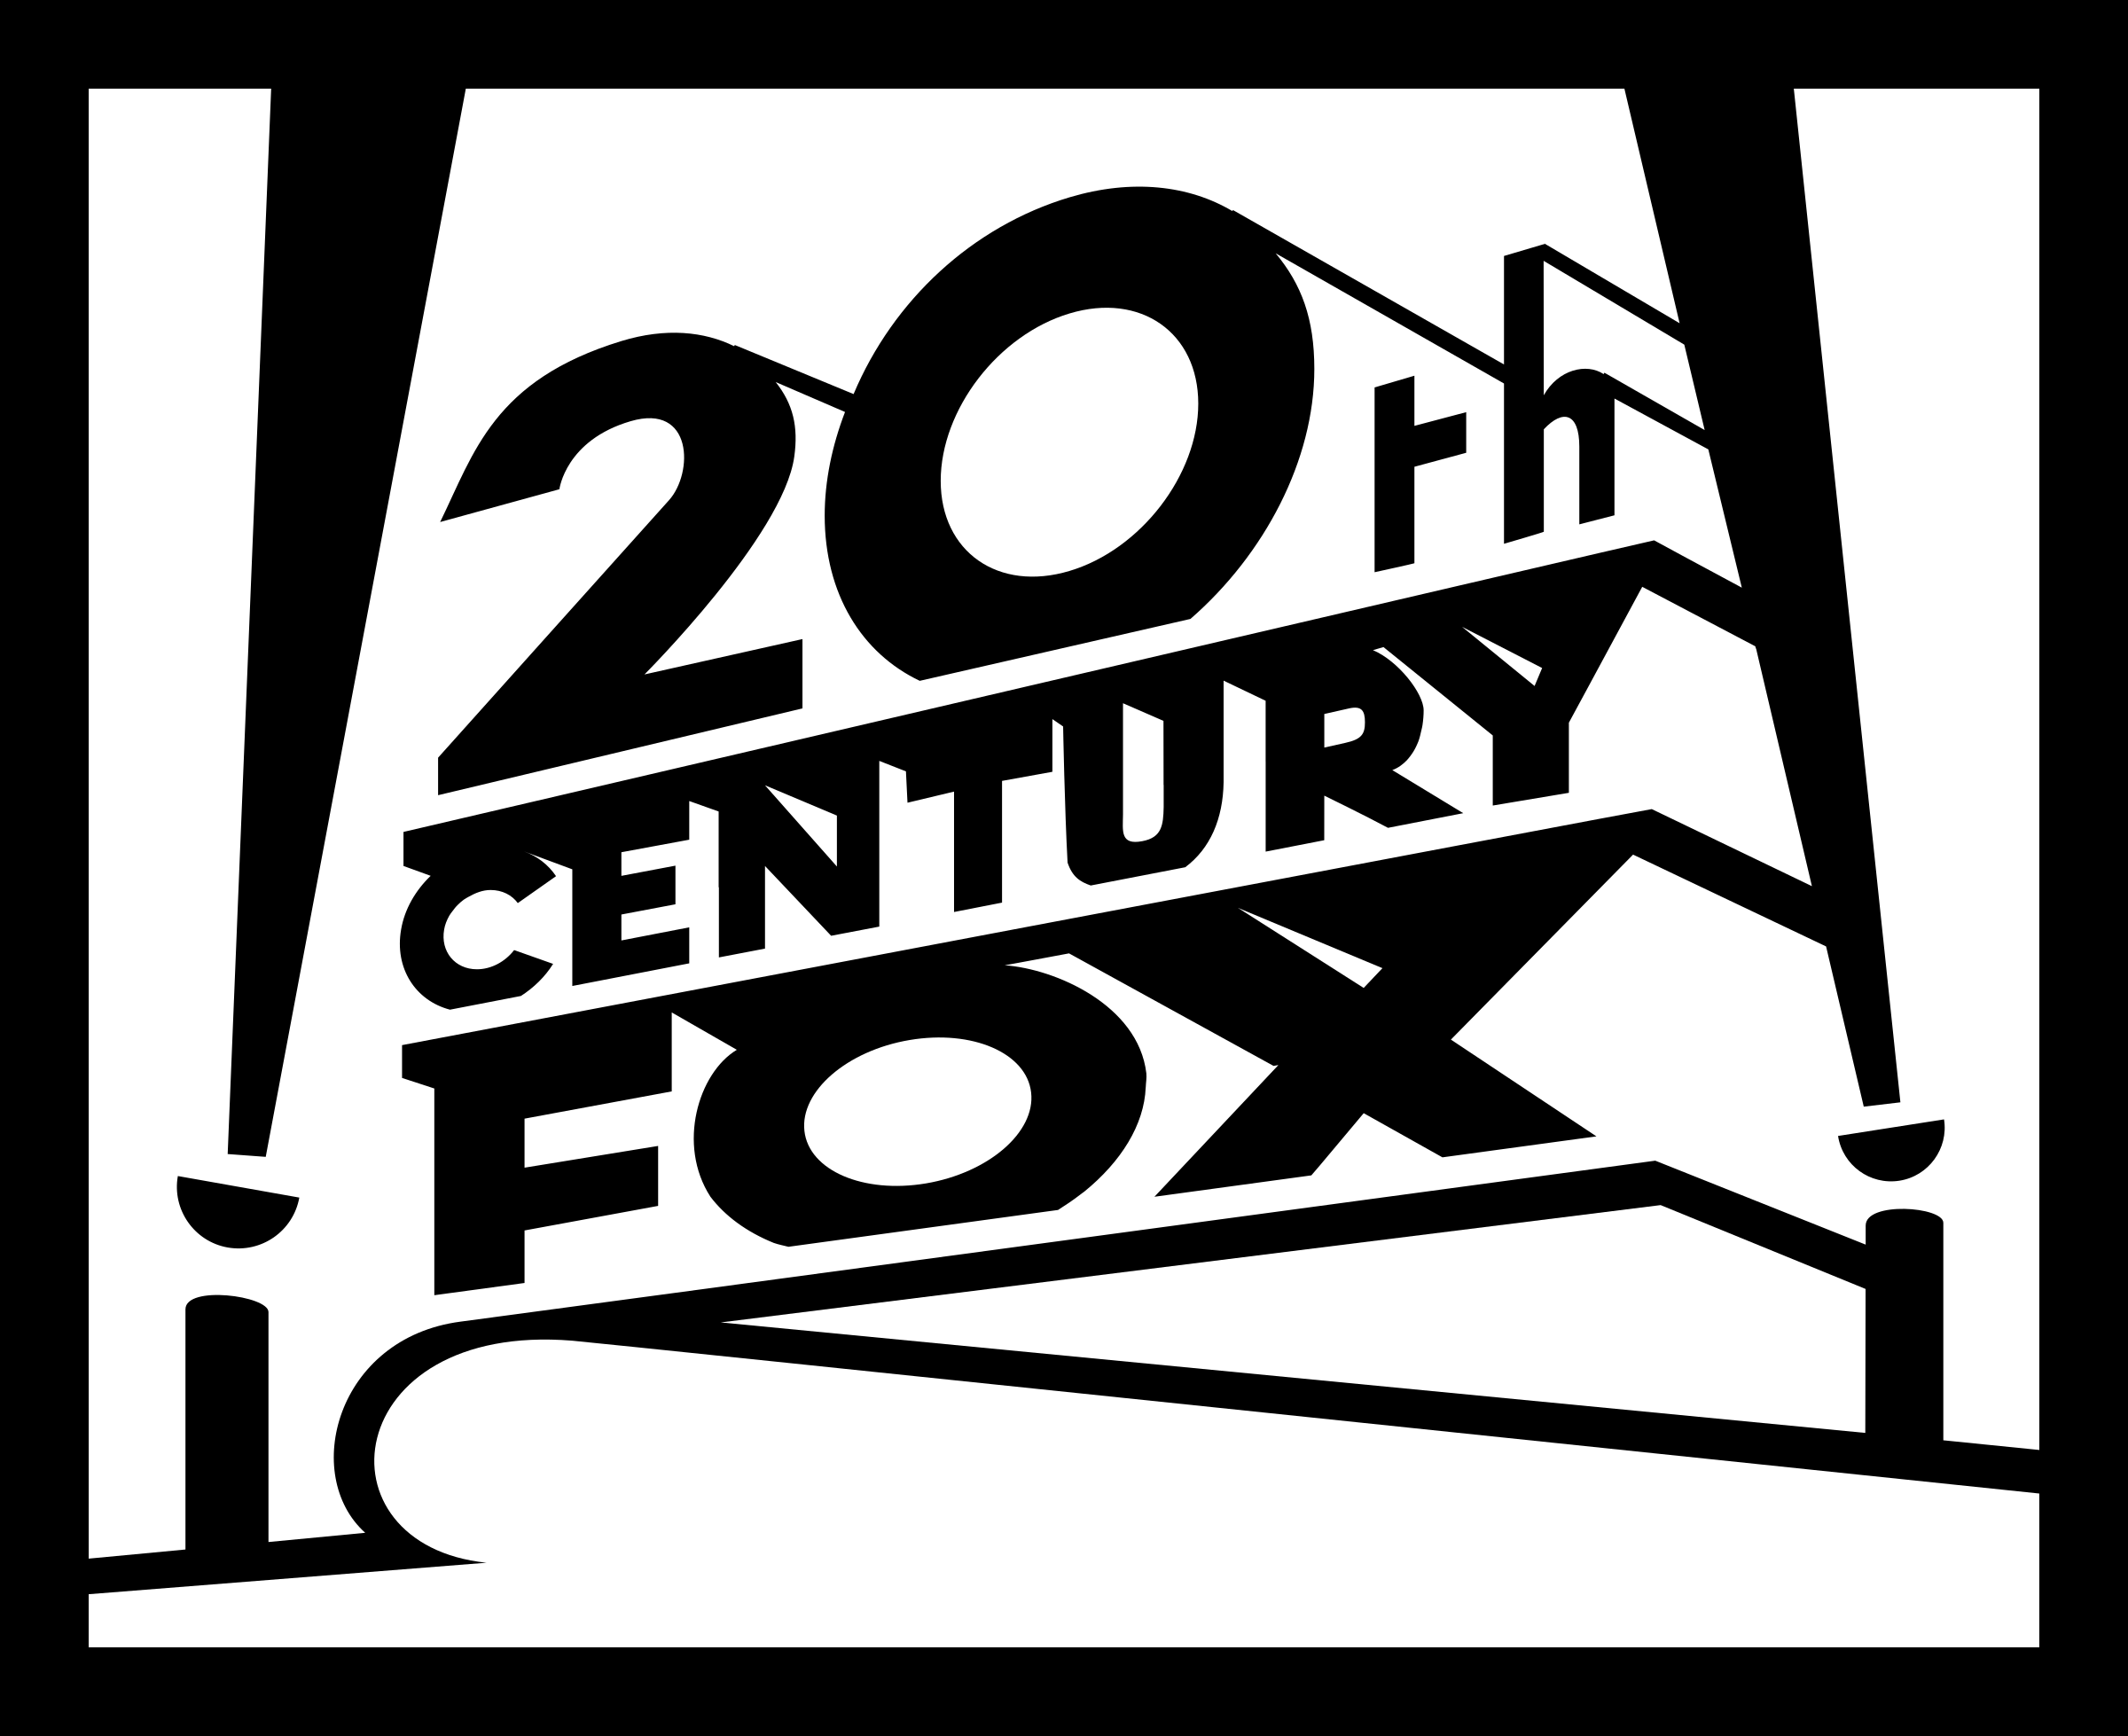 20 Century Fox Logo - 20th Century Fox Logo PNG Transparent & SVG Vector - Freebie Supply